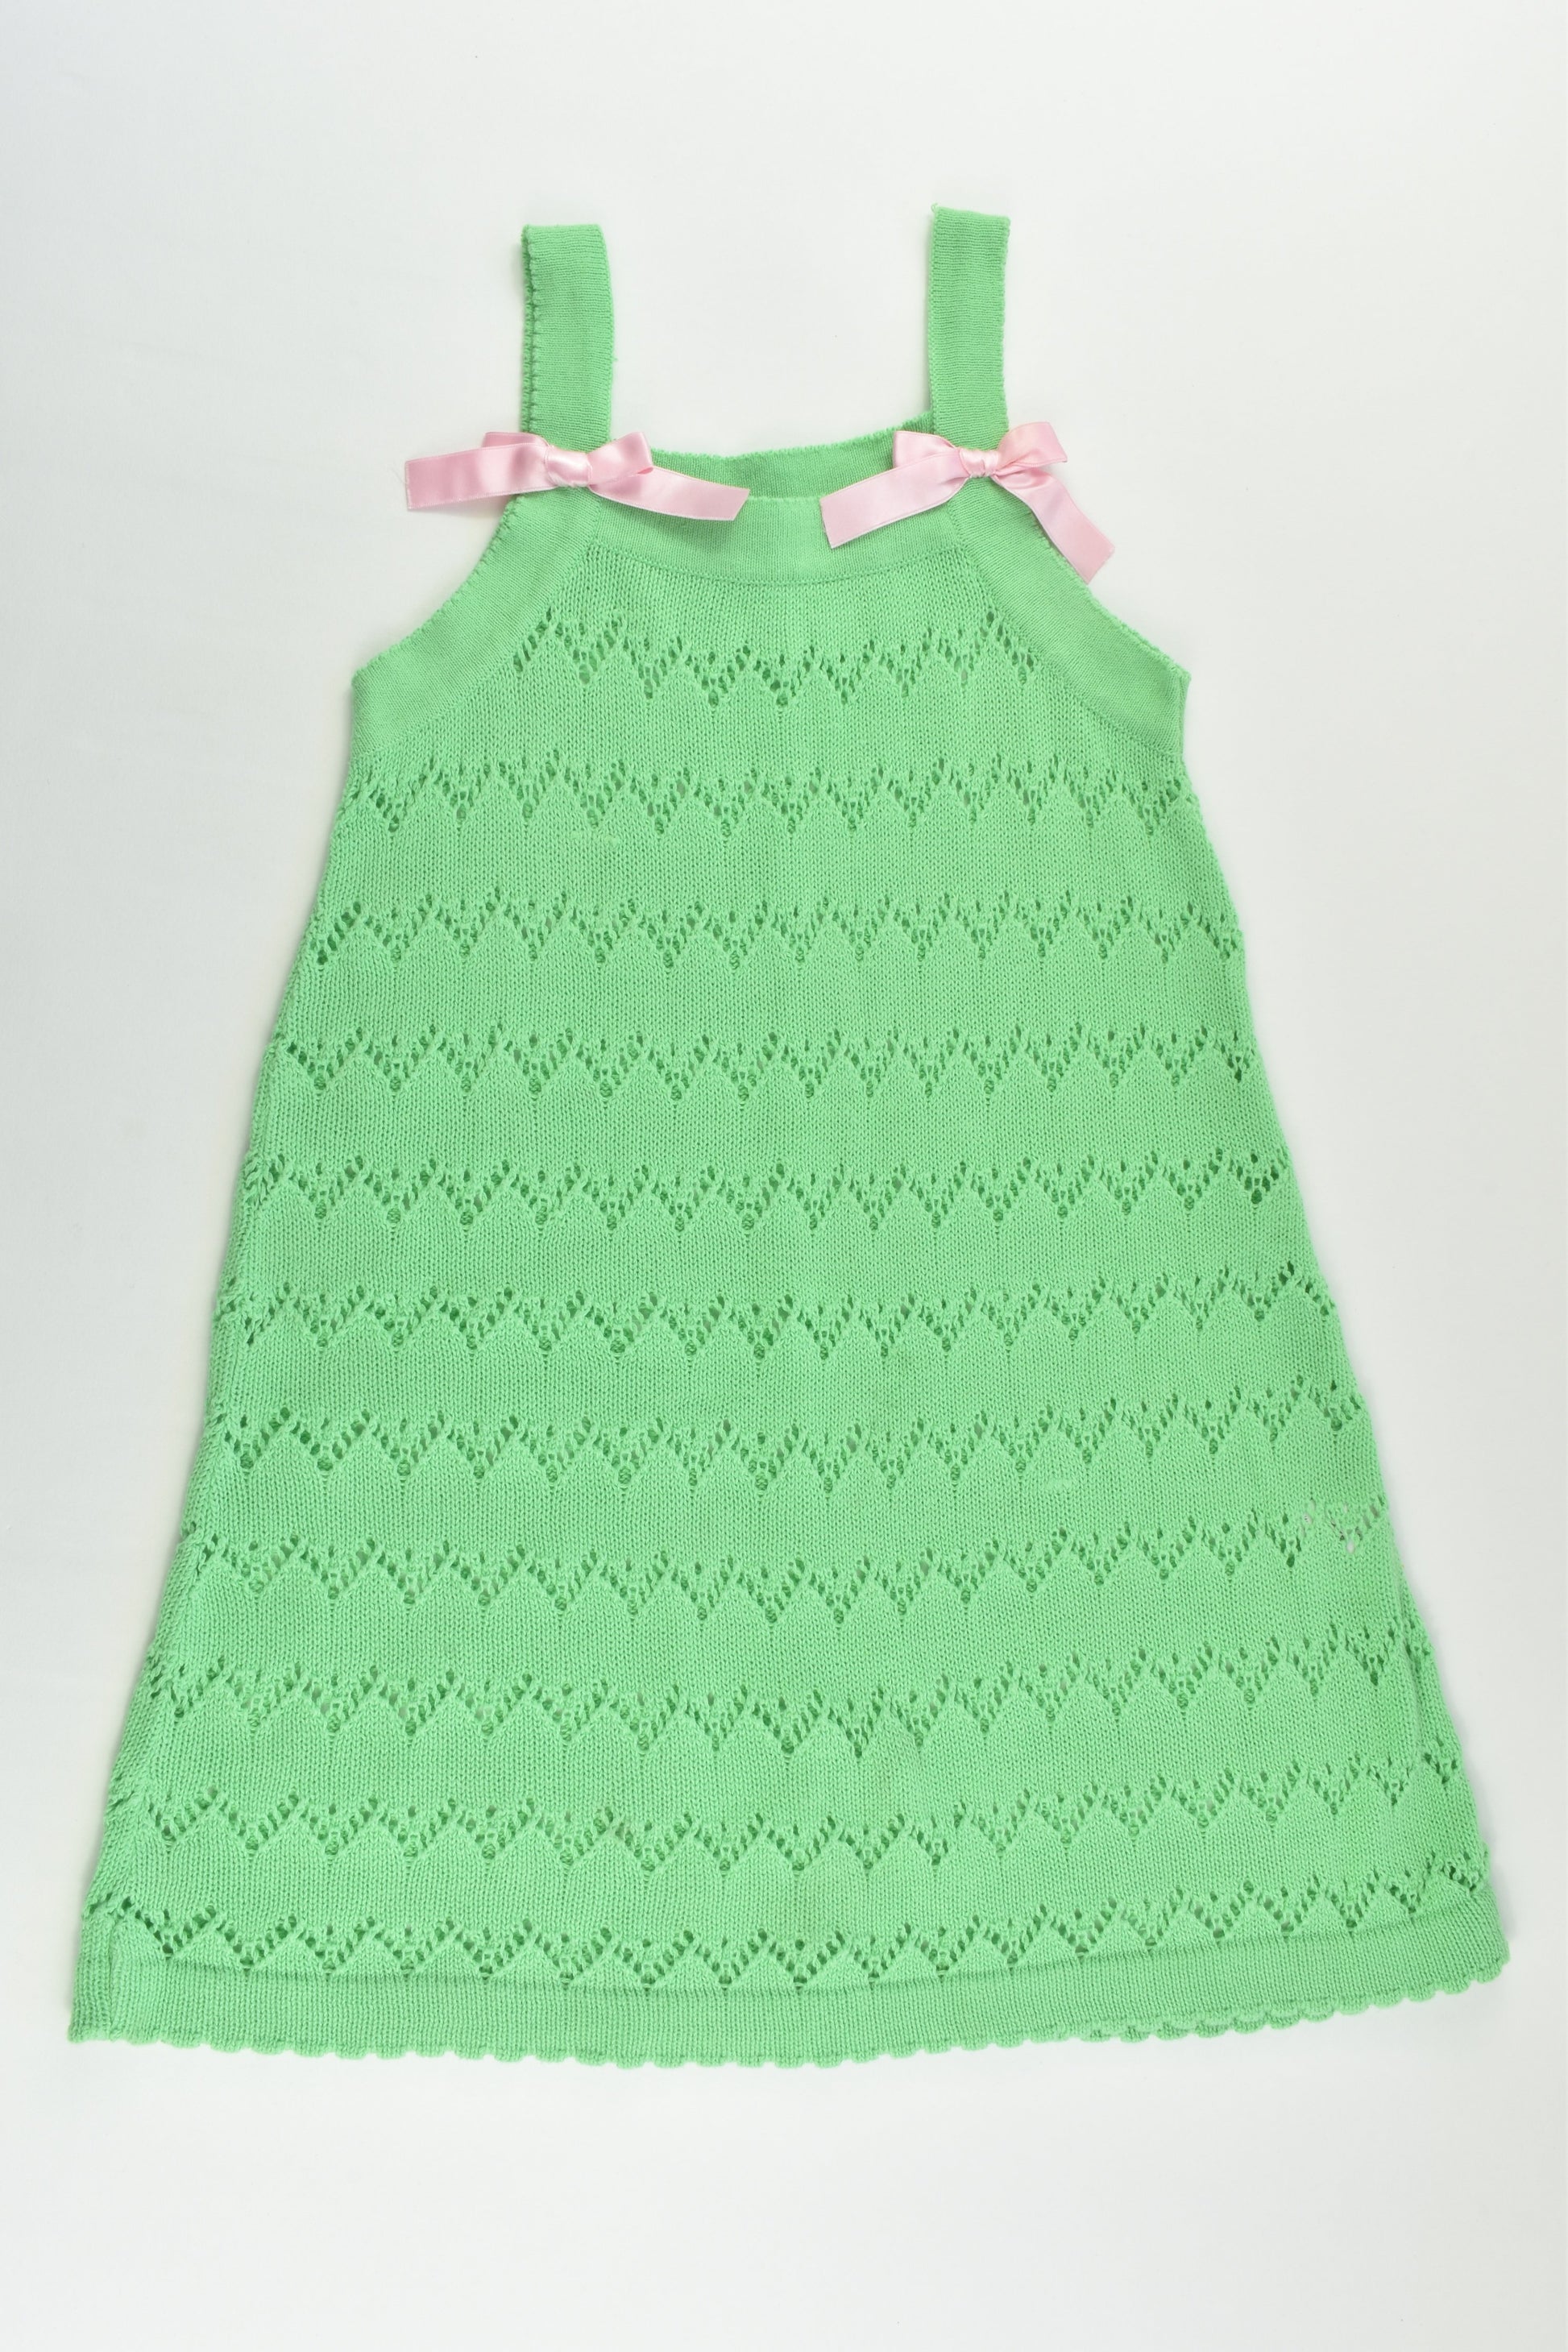 Muñequita (Spain) Size 4 Handmade Knitted Dress